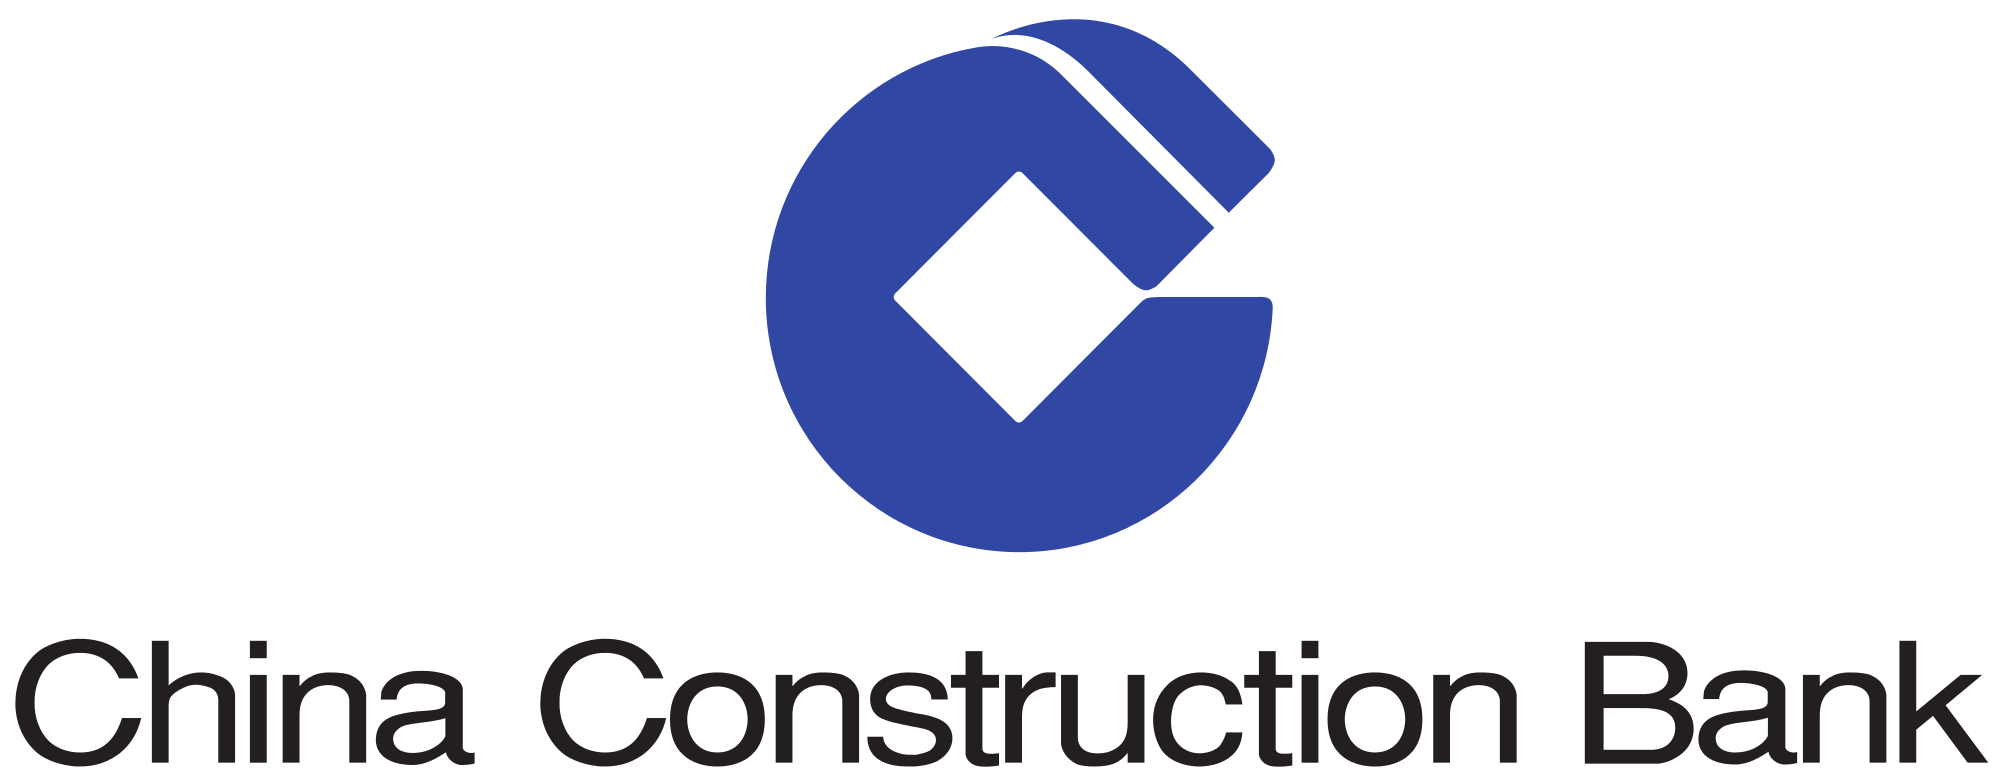 Construction bank of china. China Construction Bank логотип. China Construction Bank Corporation Китай. Bank logo. China Construction Bank лого на чёрном фоне.